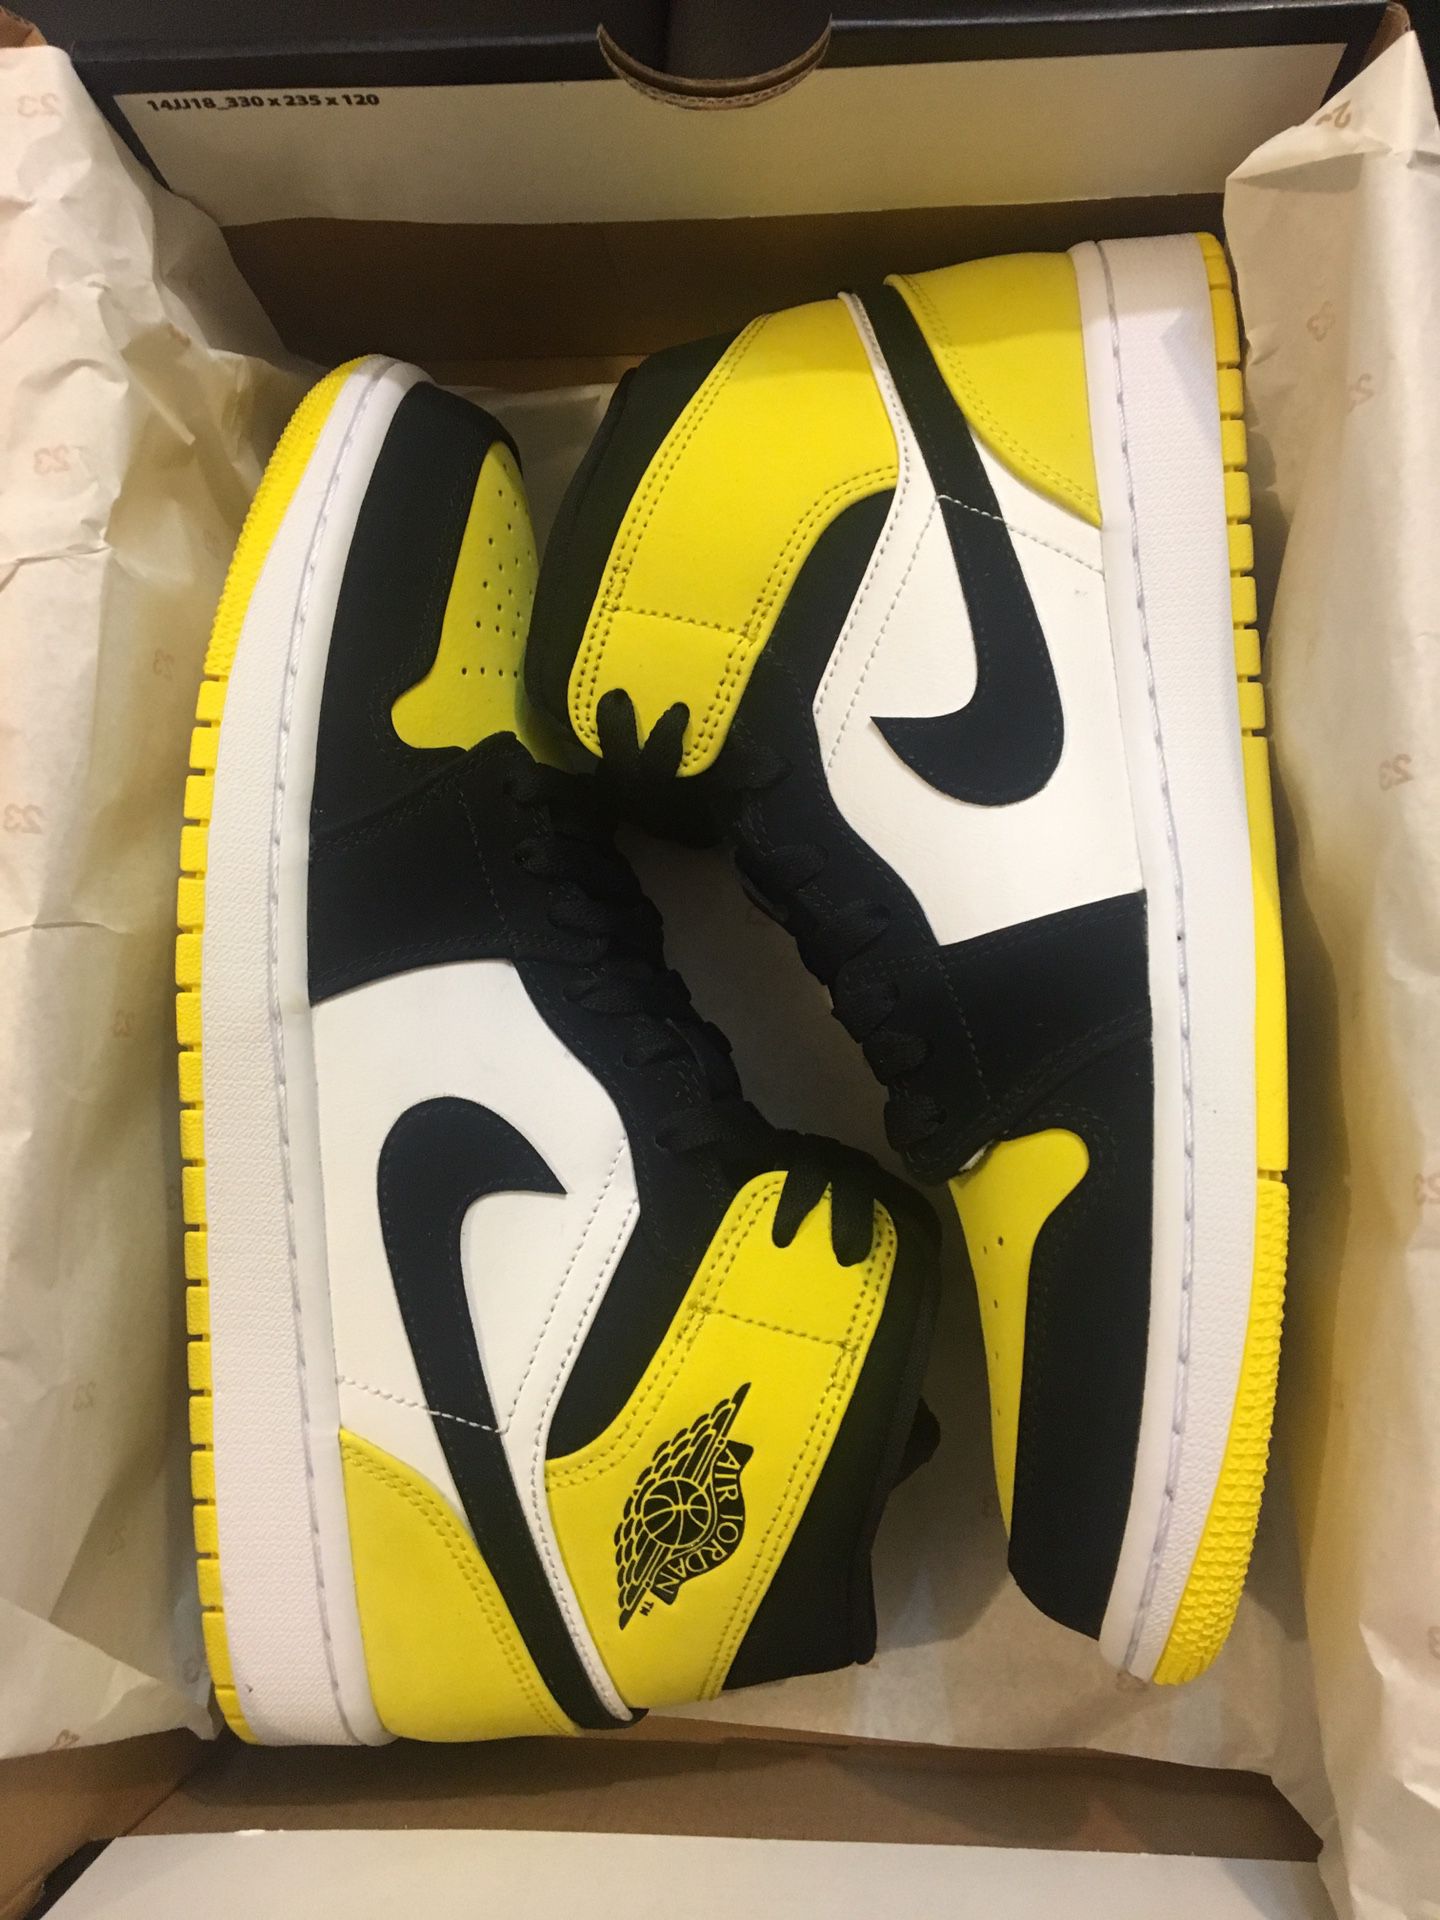 New air Jordan 1 yellow toe shoe men size 8 and 9.5